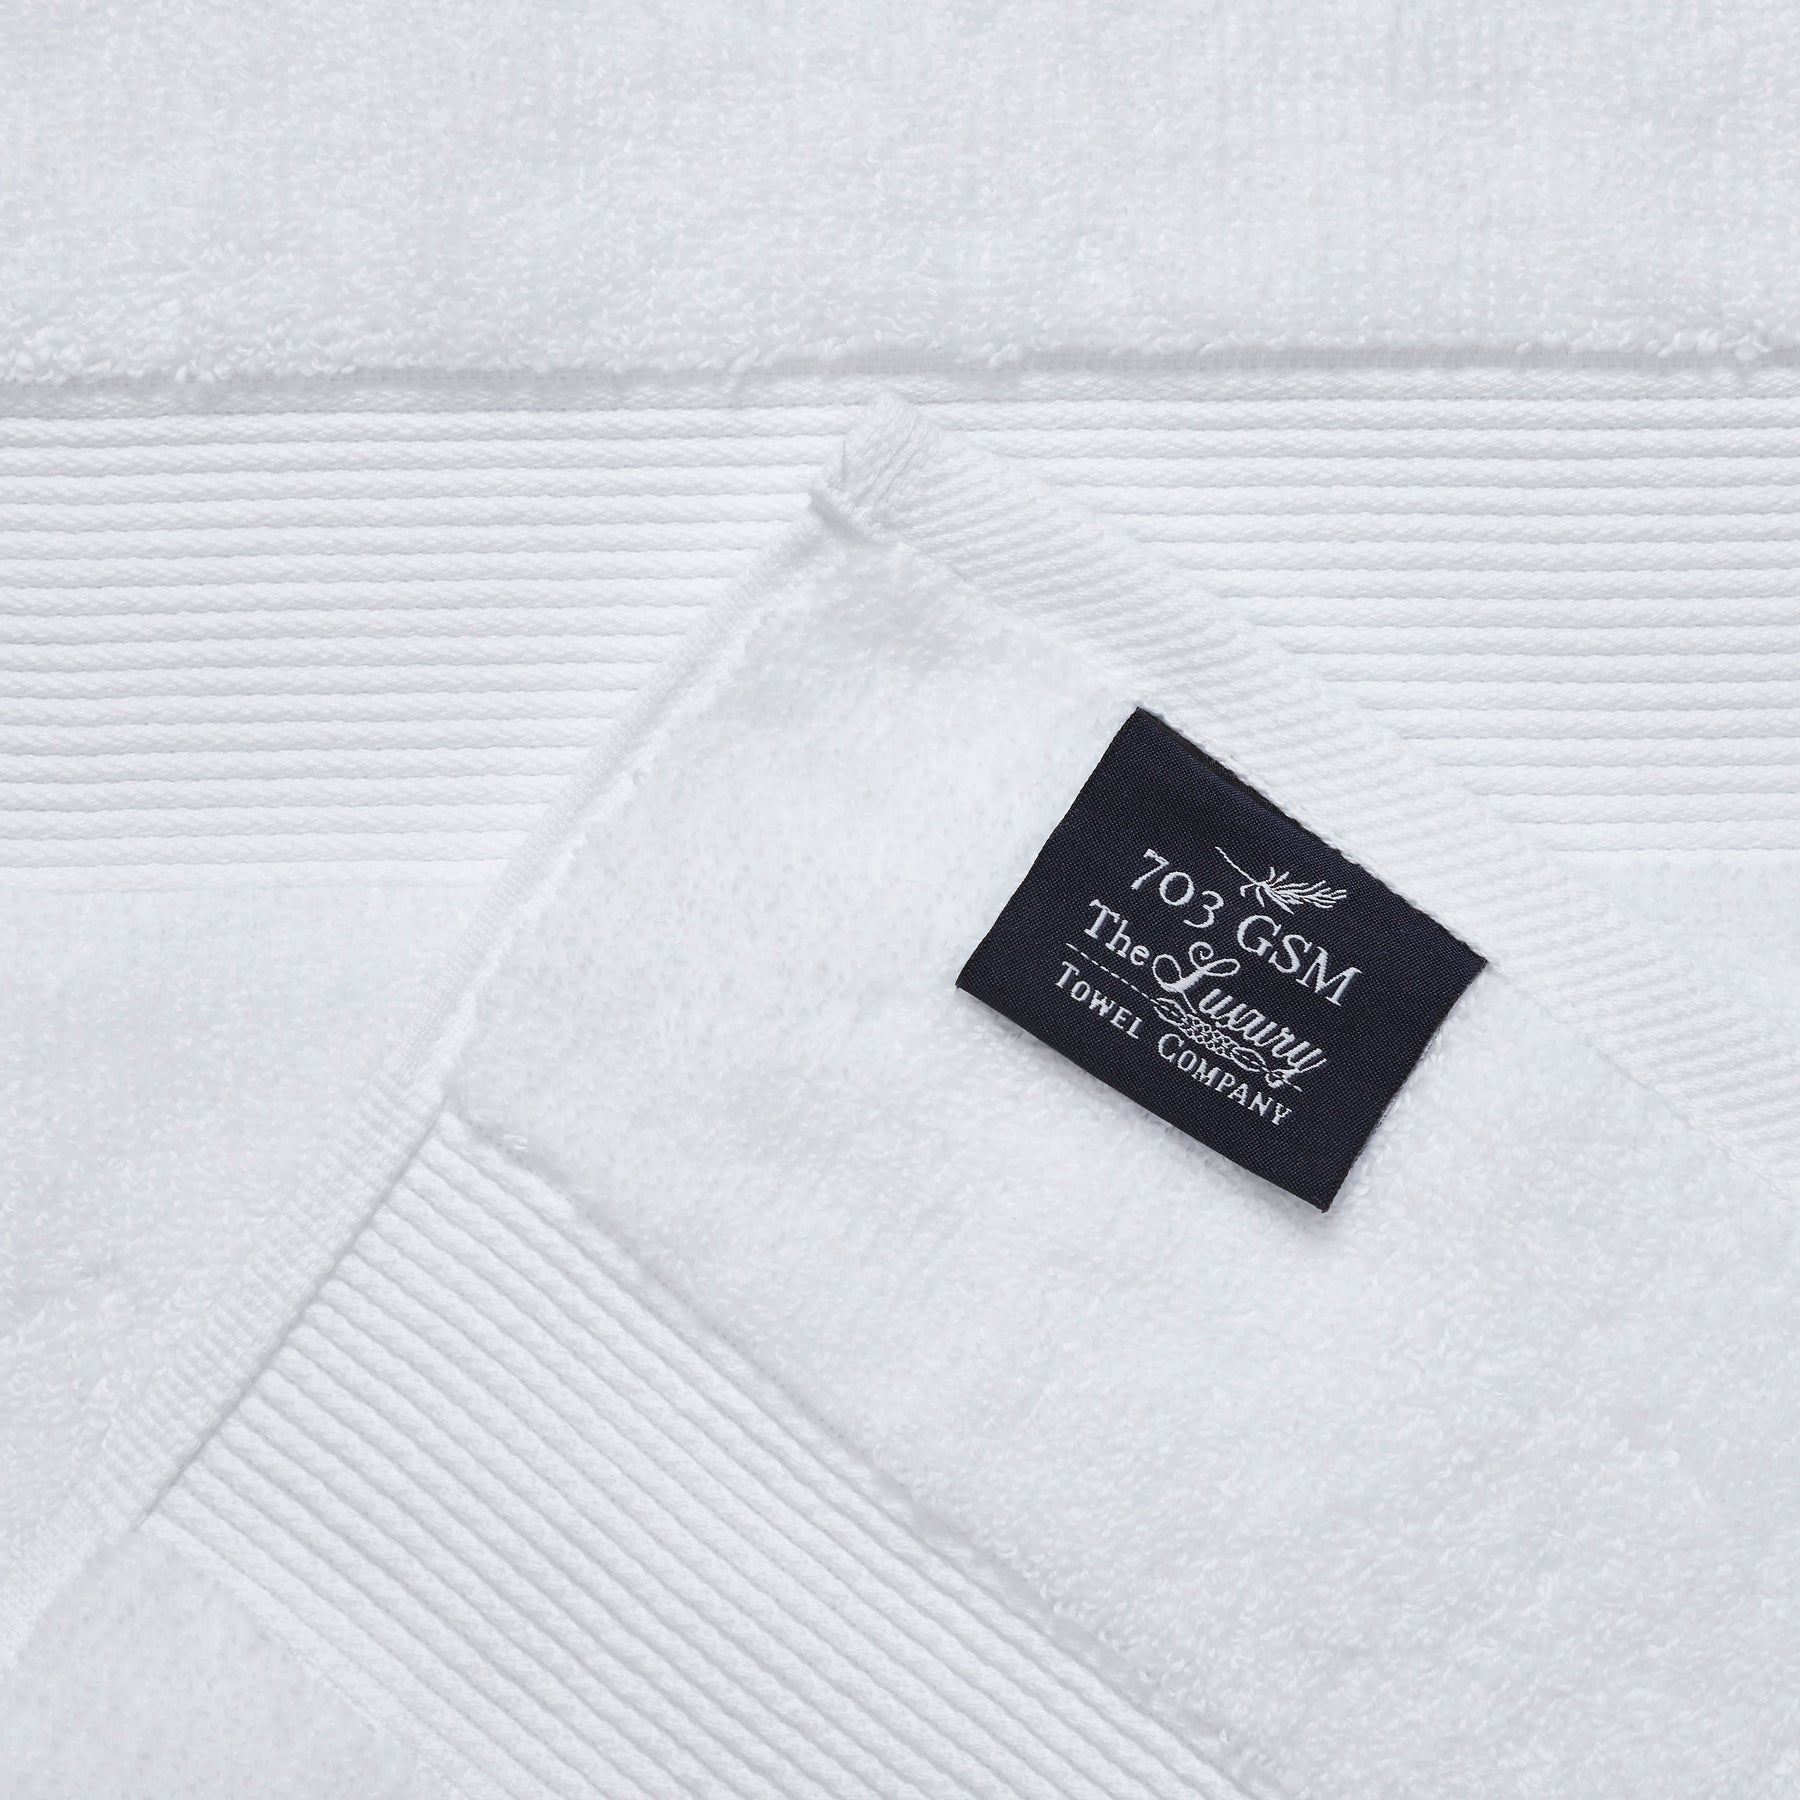 Pegasus Textiles Oasis Luxury Hotel & Spa Quality White Towels - 600gs